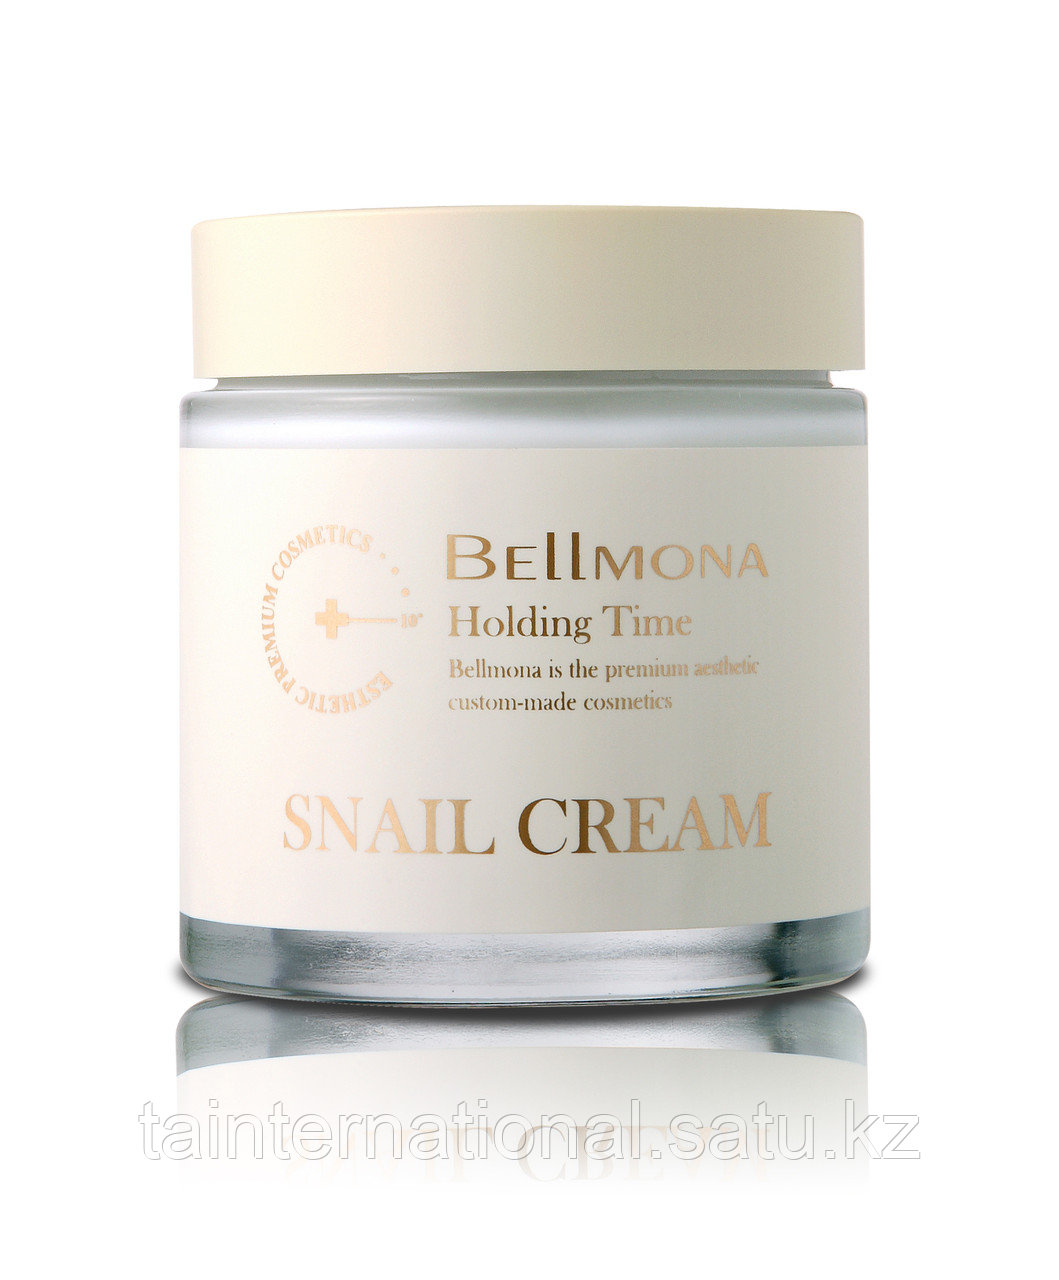 Bellmona Snail Cream - Крем для лица с муцином улитки